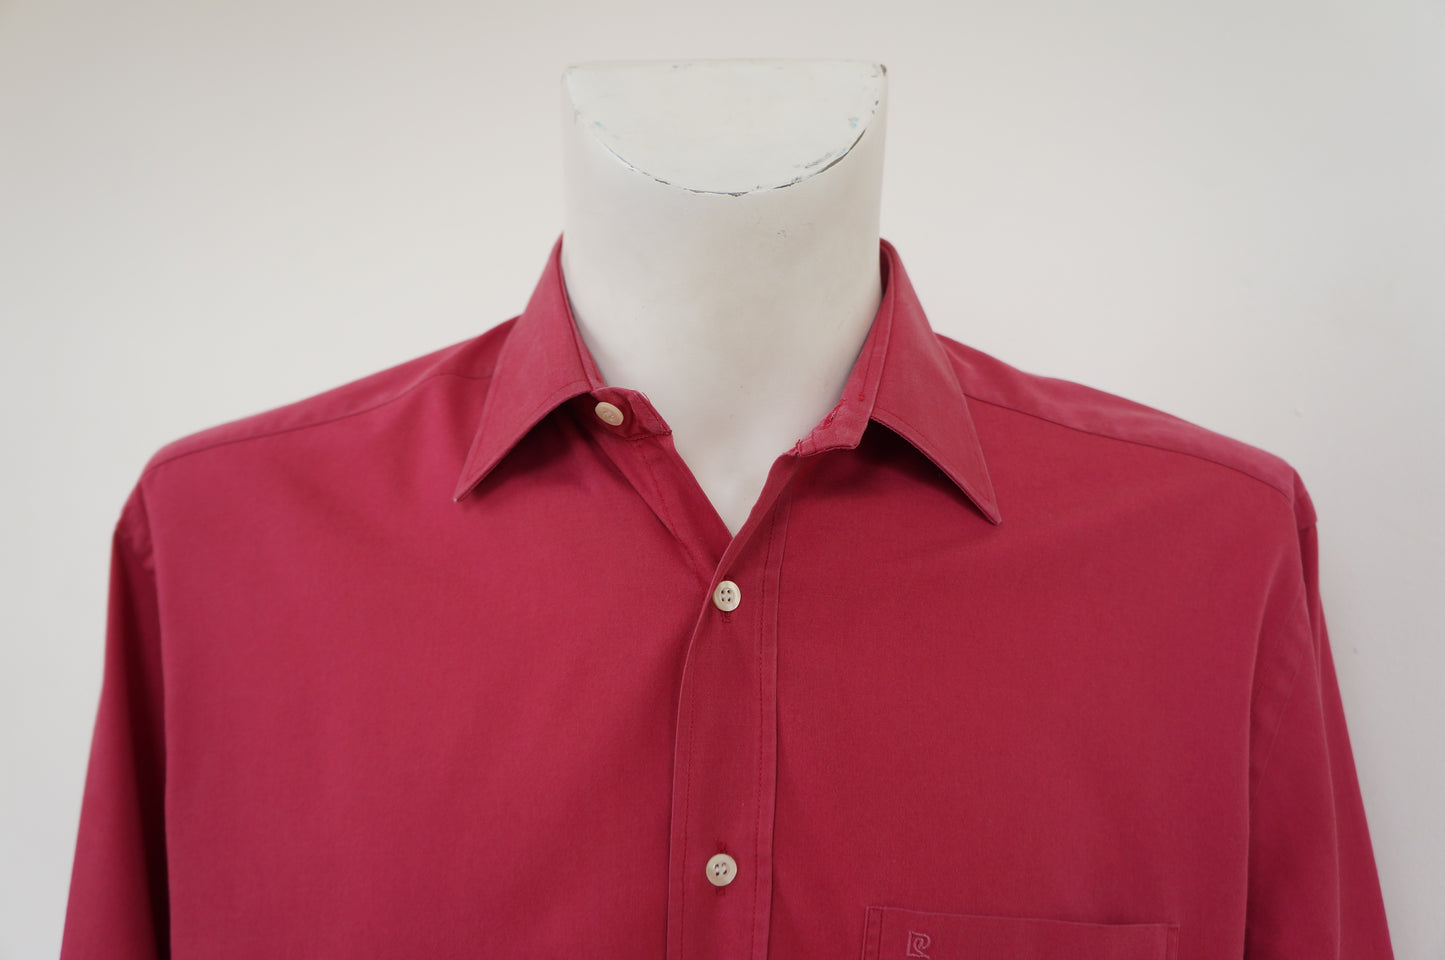 Pierre Cardin red shirt